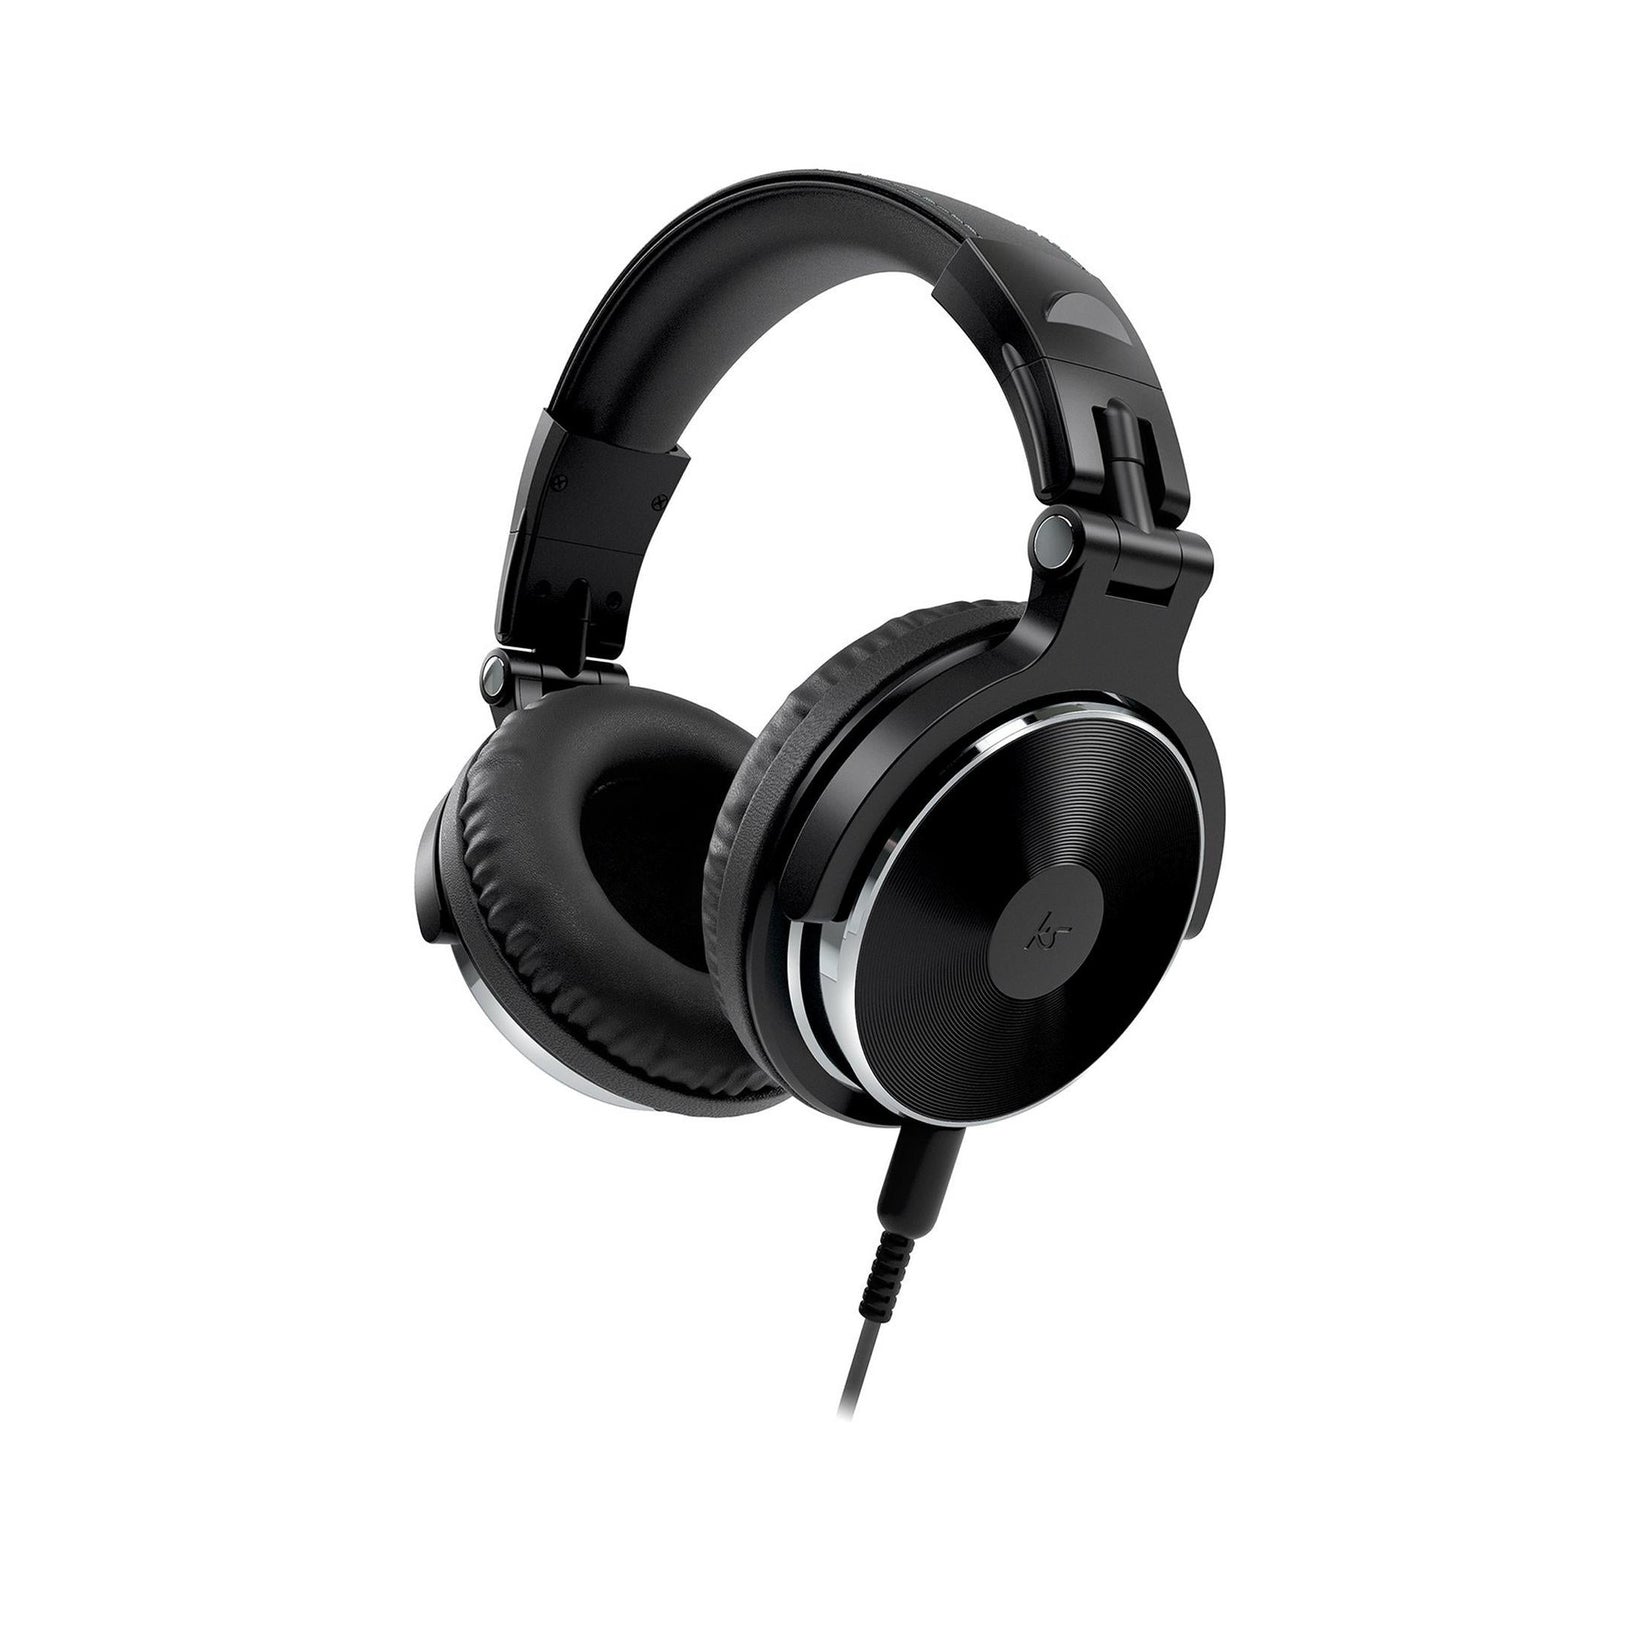 KitSound KSNDJBK DJ 2 Wired Headphones - Black - Refurbished Excellent